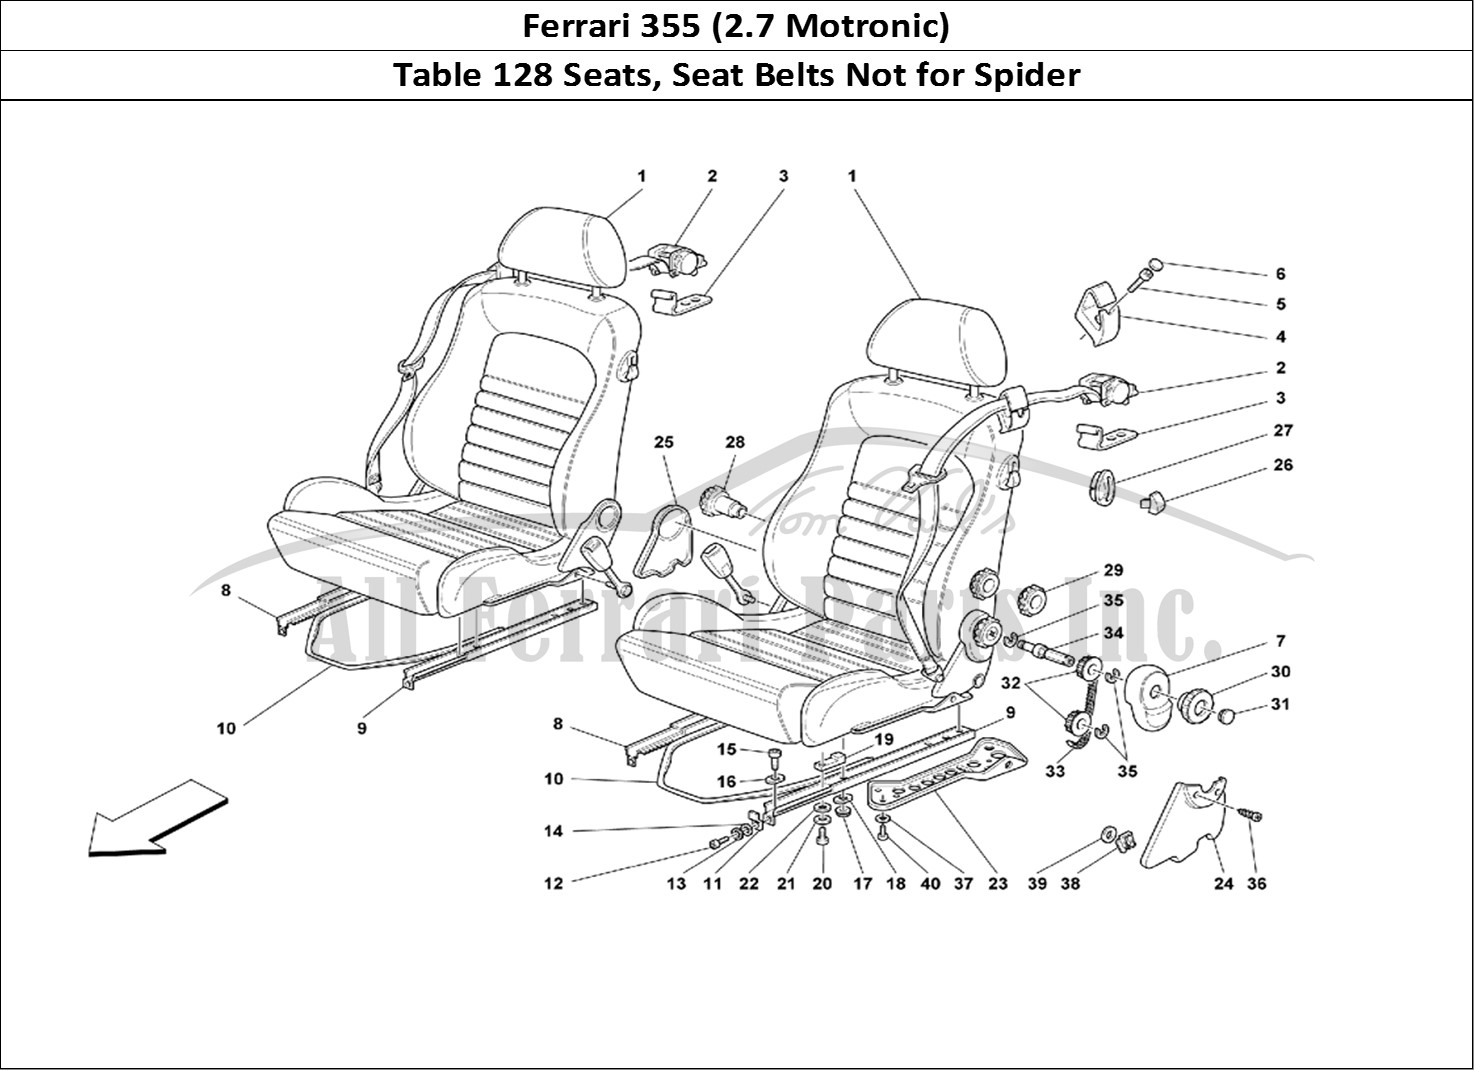 Ferrari Parts Ferrari 355 (2.7 Motronic) Page 128 Seats and Safety Belts -C